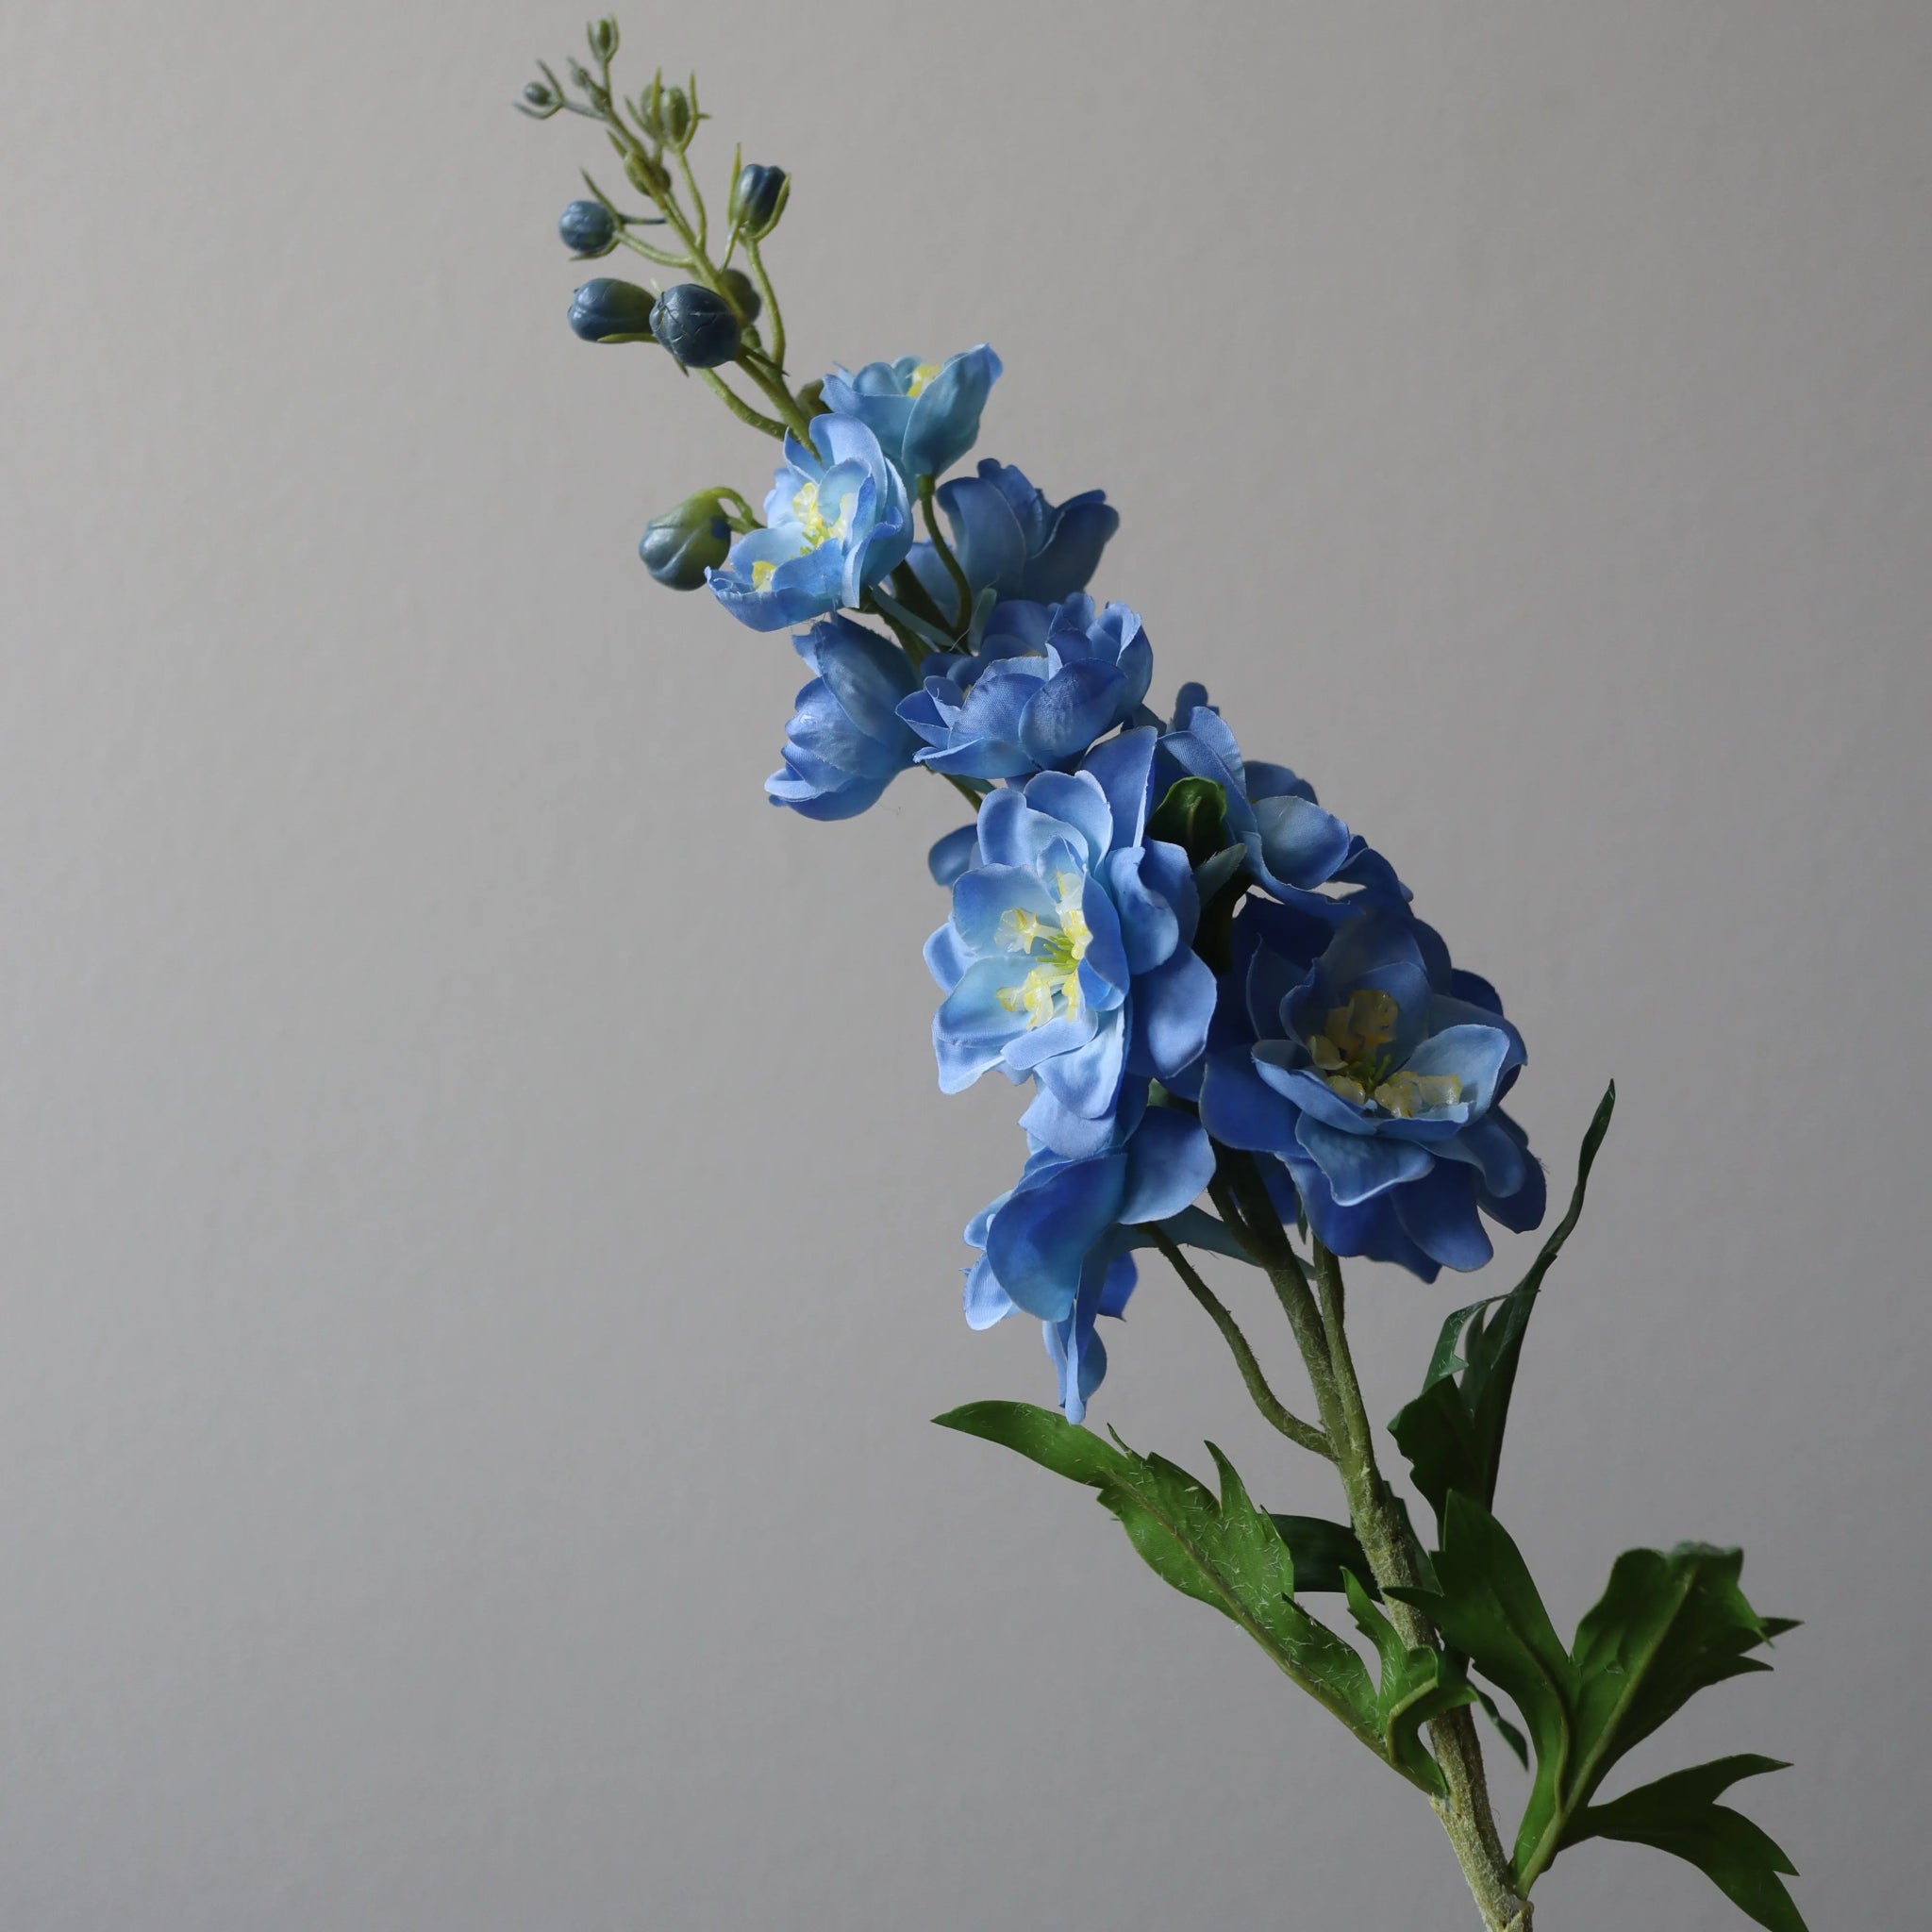 Delphinium Flower in Blue from Botané